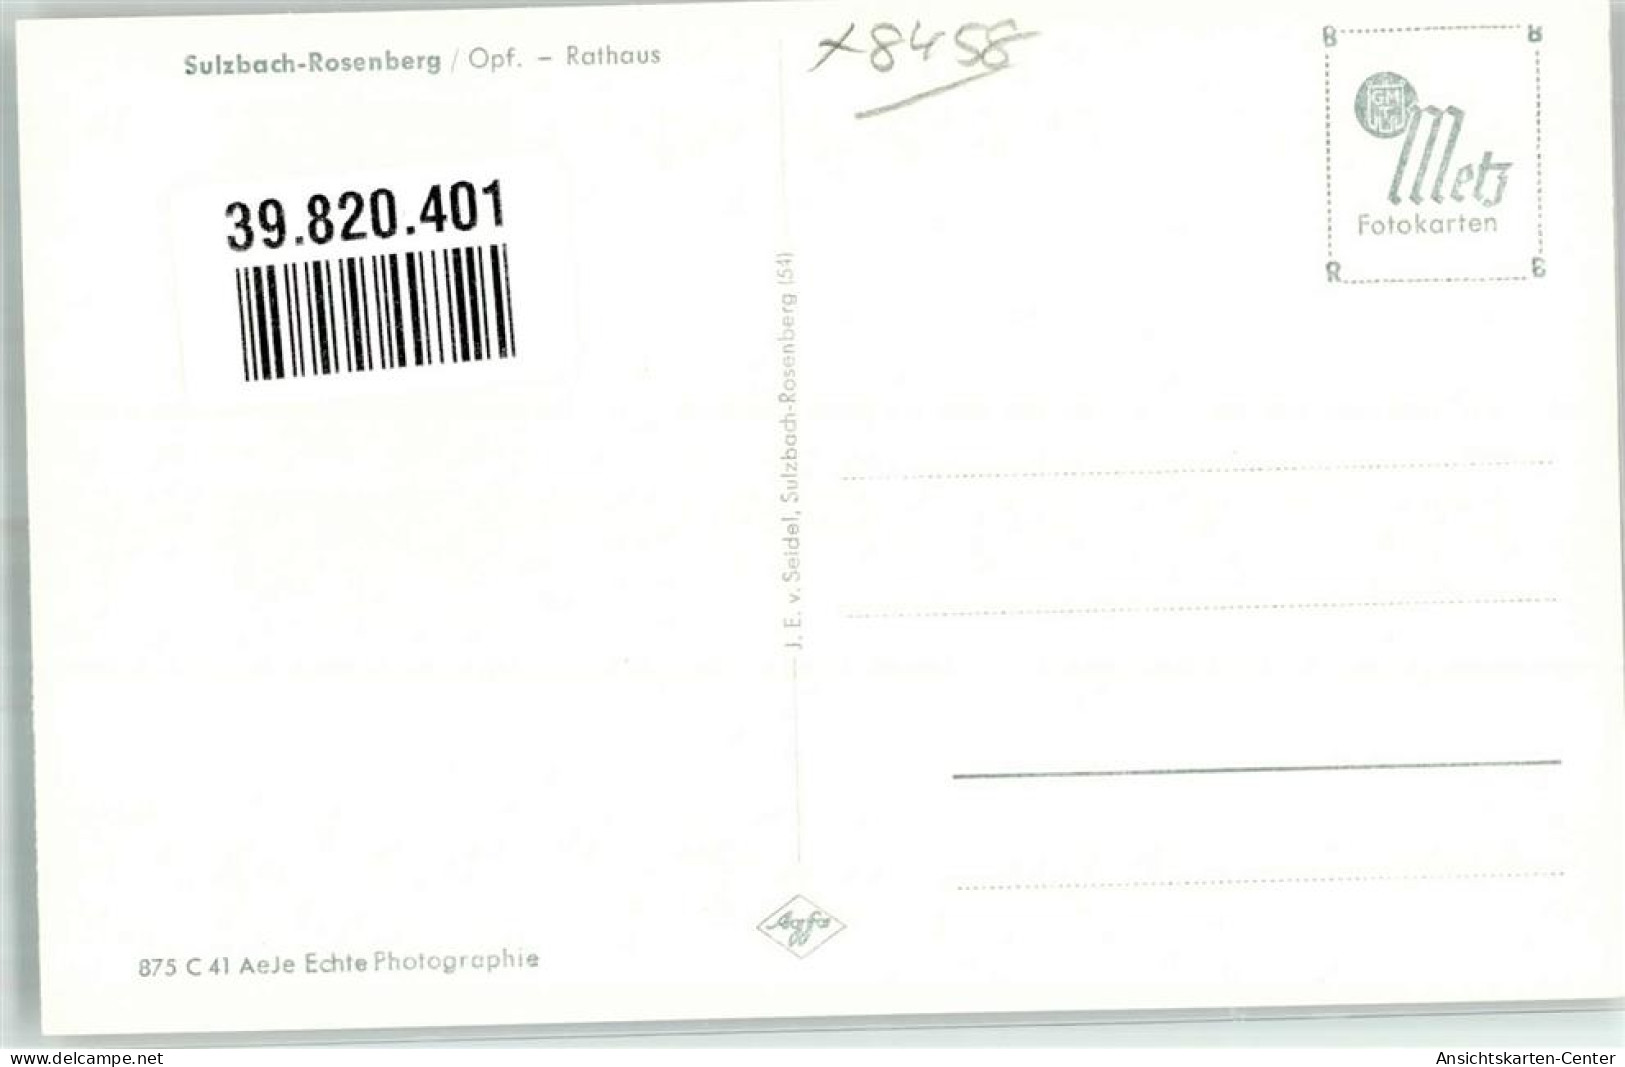 39820401 - Sulzbach-Rosenberg - Sulzbach-Rosenberg